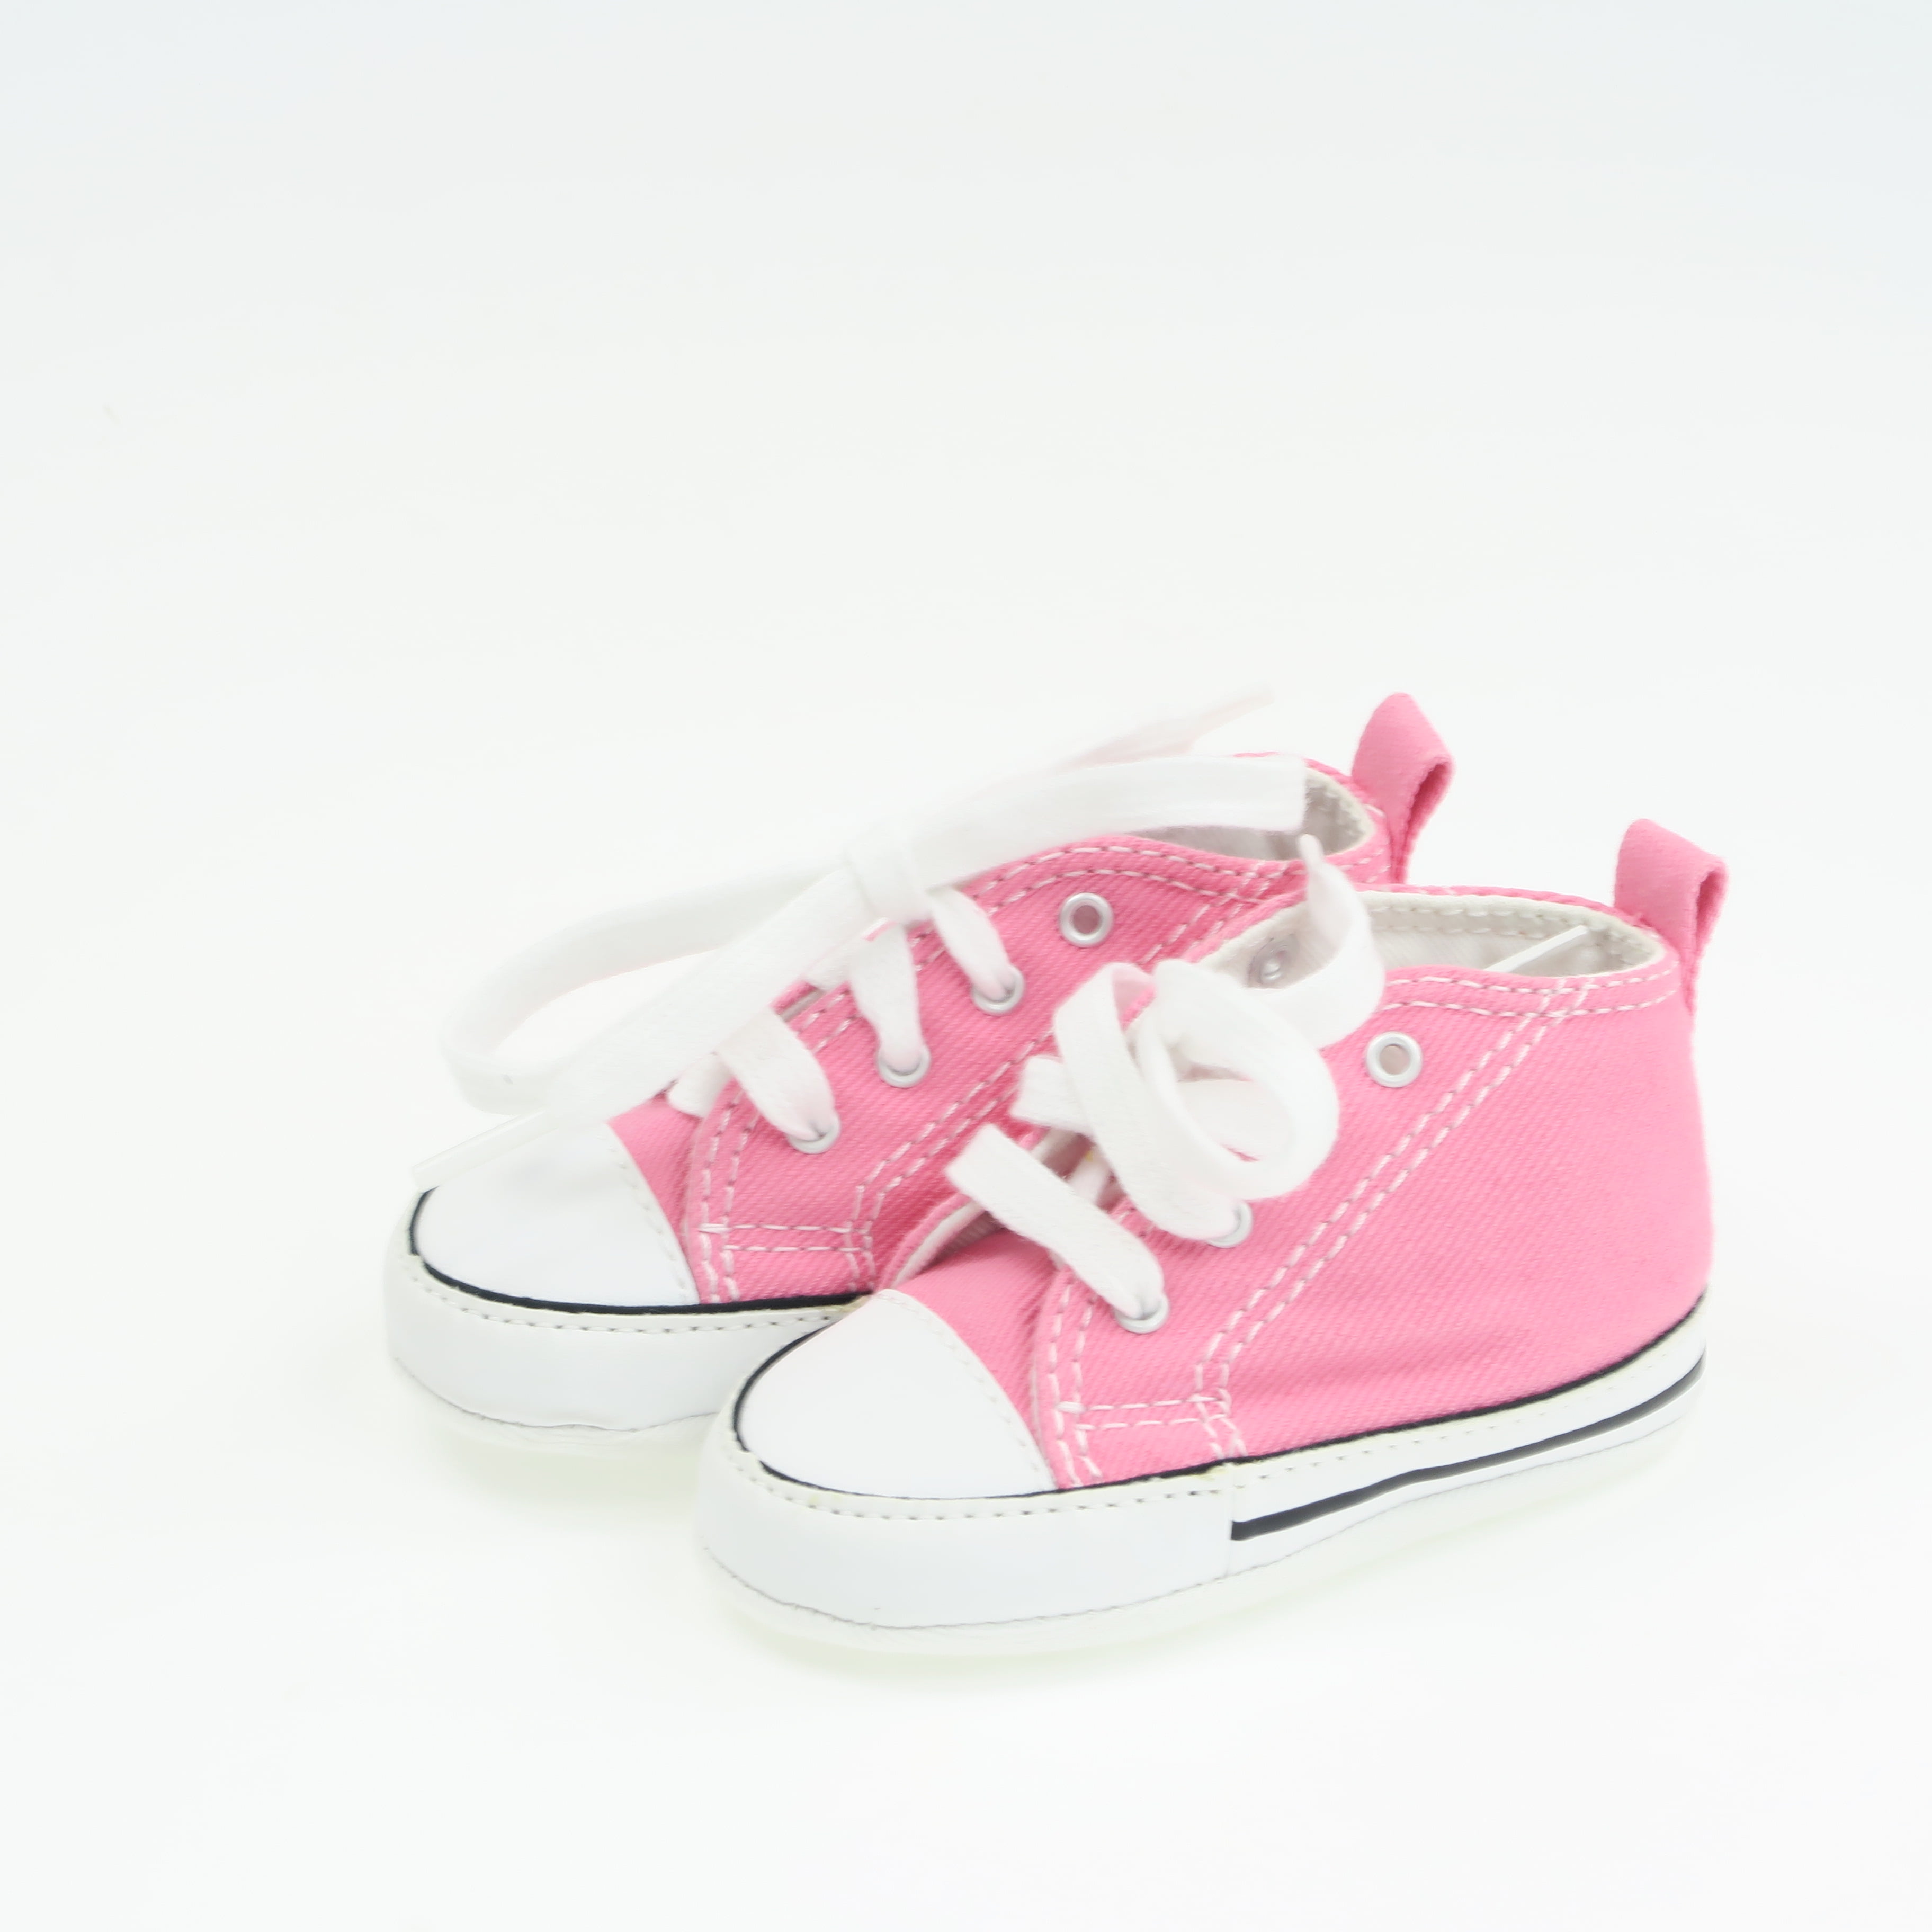 geleider Optimaal Luxe Pre-owned Converse Girls Pink Sneakers size: 2 Infant - Walmart.com